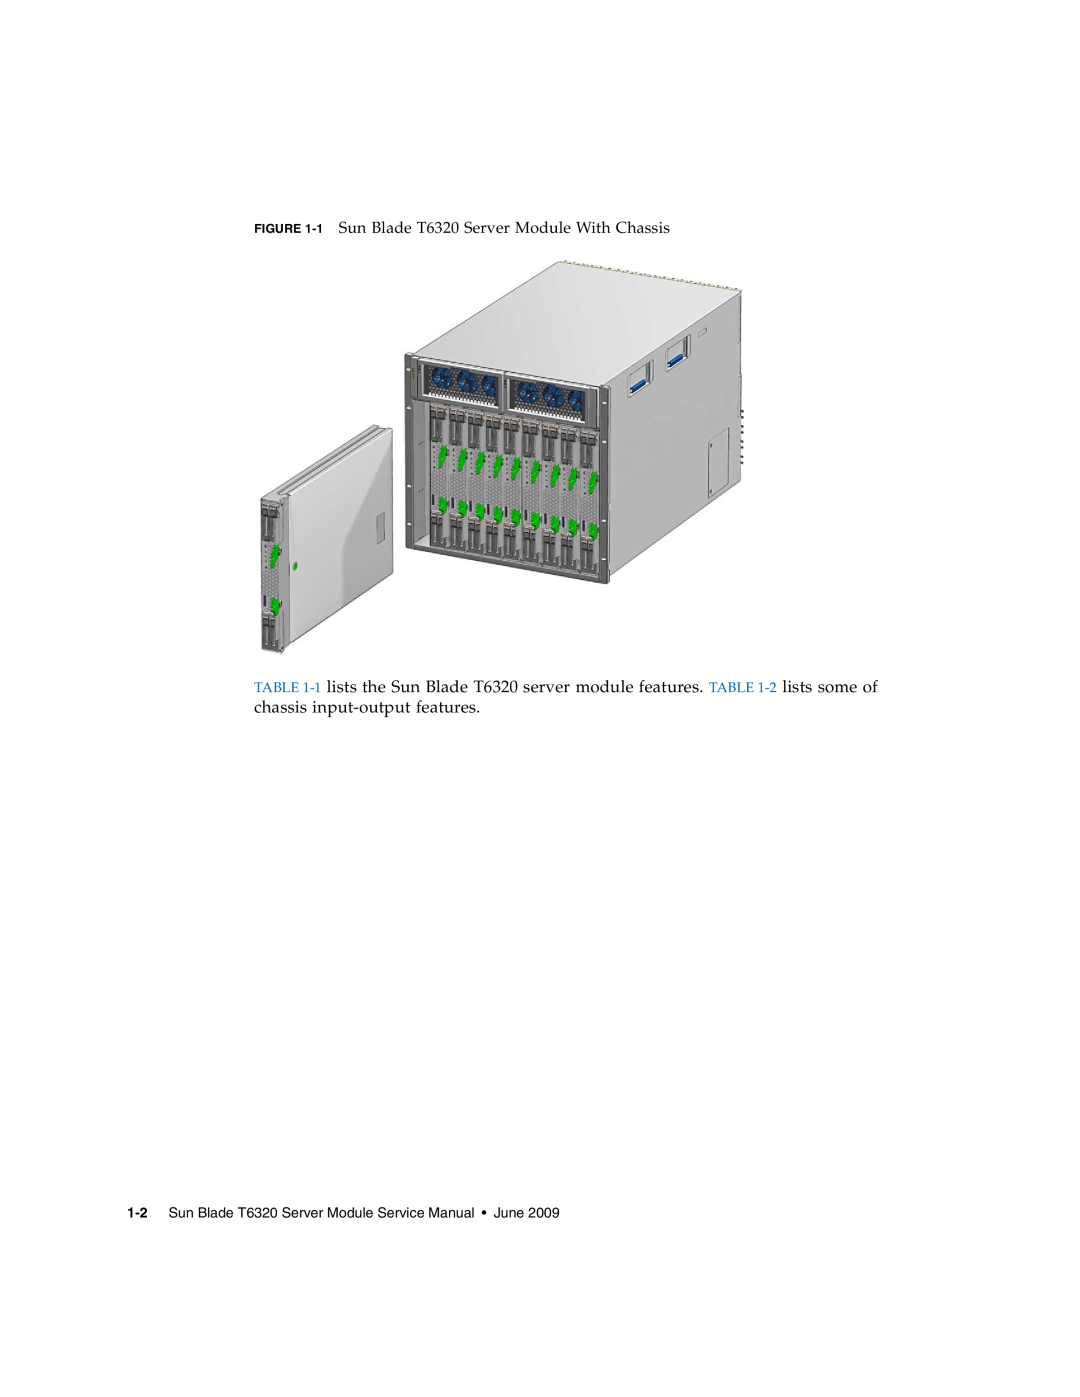 Sun Microsystems 1 Sun Blade T6320 Server Module With Chassis, Sun Blade T6320 Server Module Service Manual June 